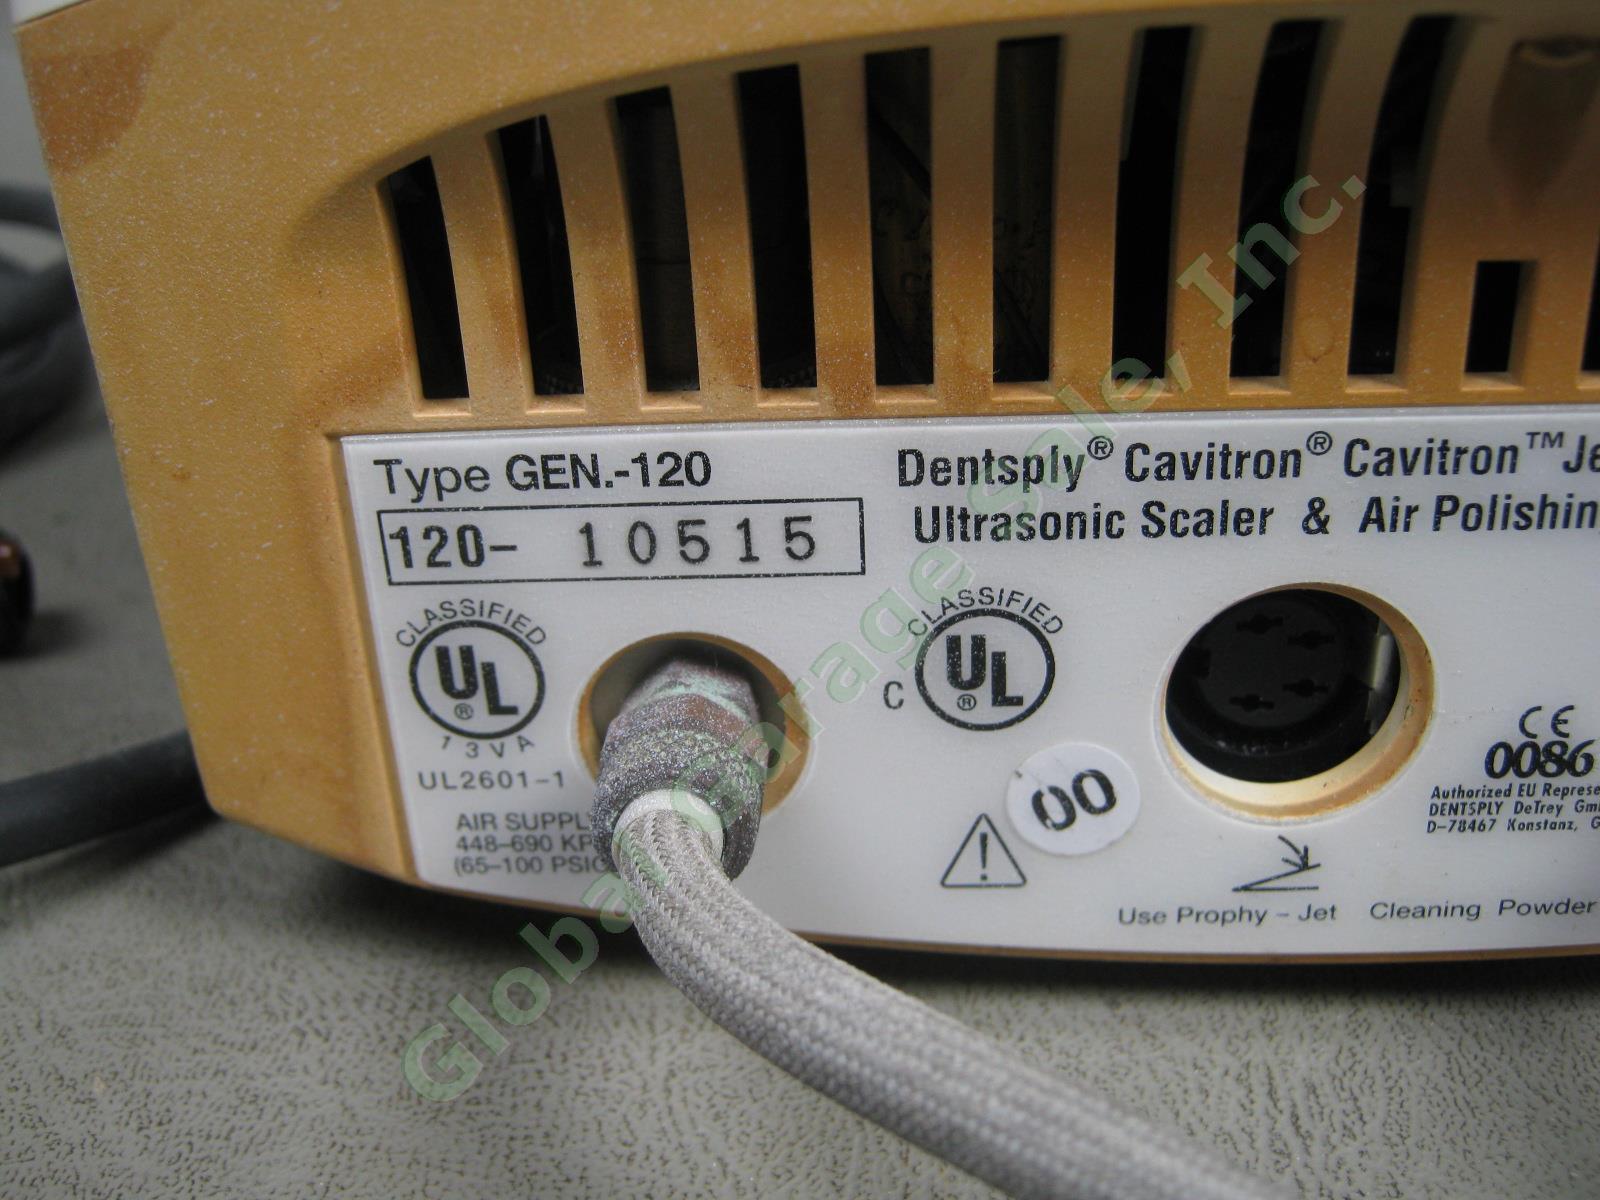 Dentsply Cavitron Jet SPS Prophy Ultrasonic Dental Scaler & Air Polishing System 6